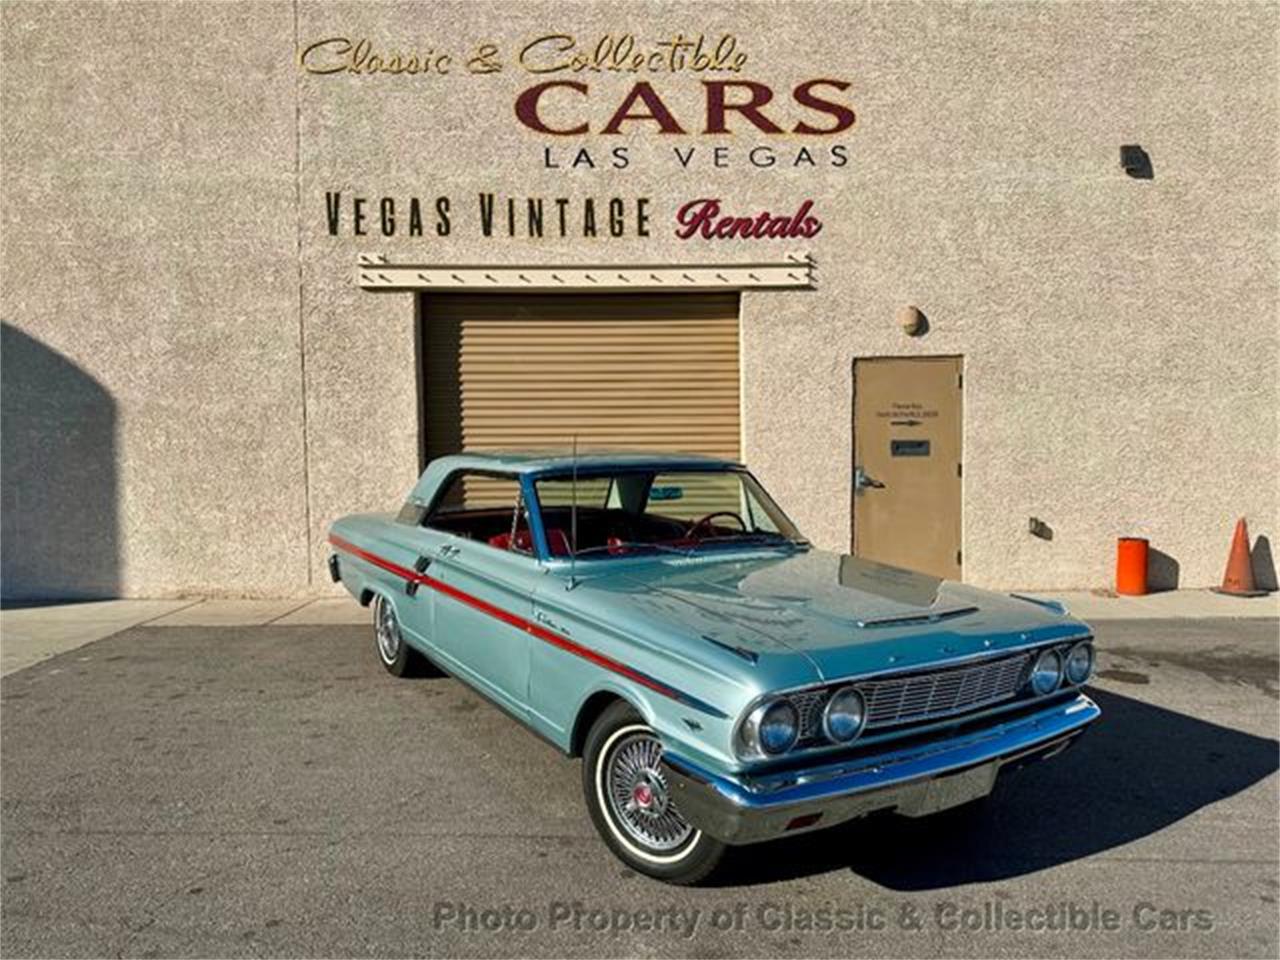 For Sale: 1964 Ford Fairlane 500 in Las Vegas, Nevada for sale in Las Vegas, NV